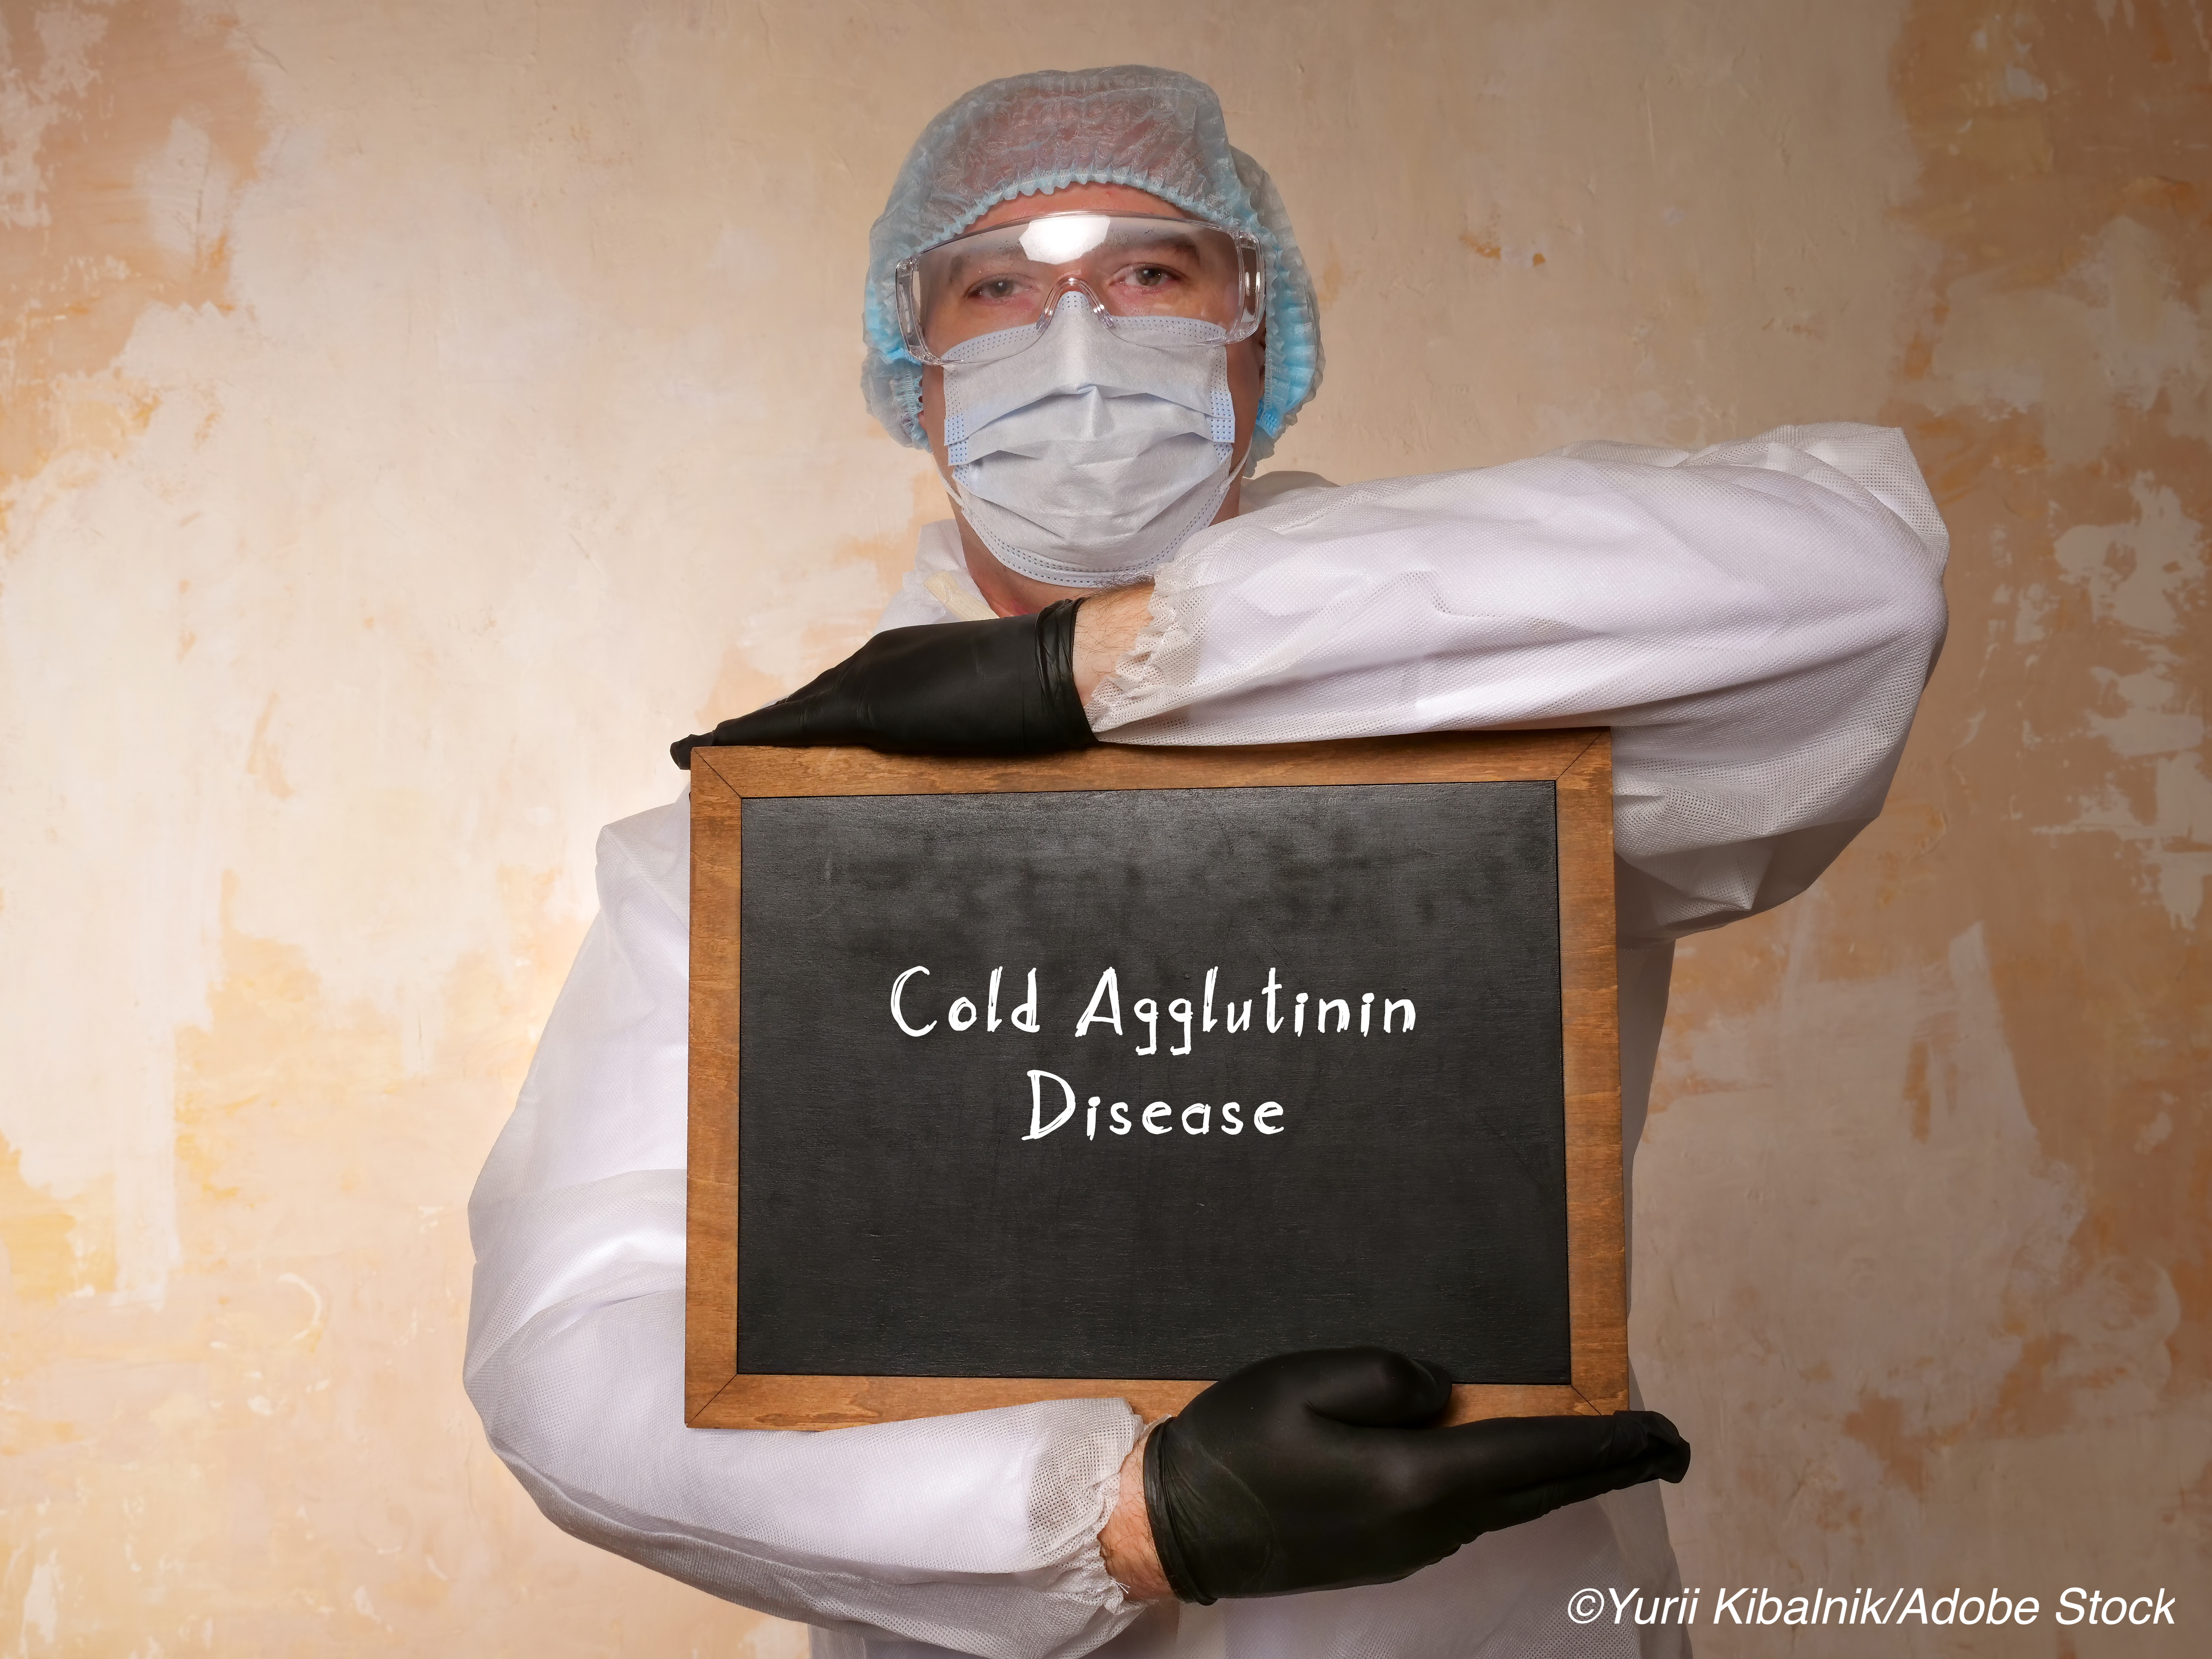 Novel Antibody Shows Benefit in Cold Agglutinin Disease